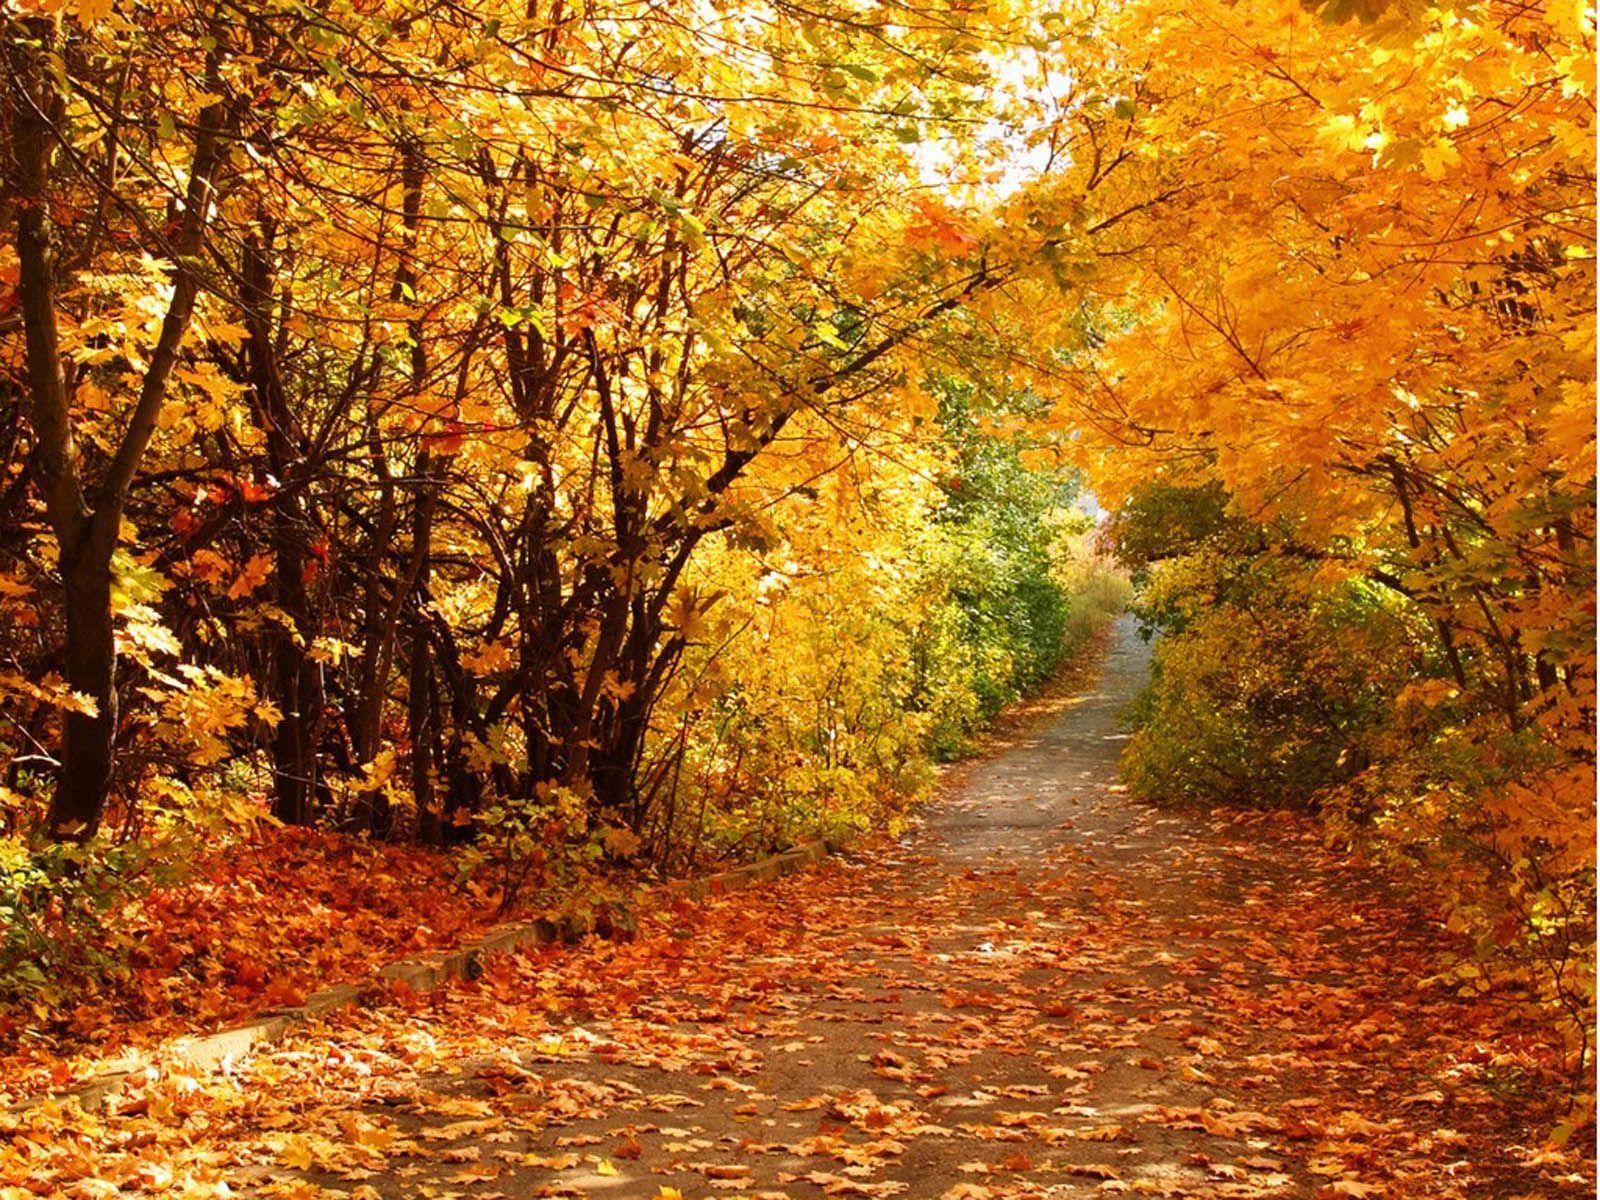 Autumn Scenery Desktop Wallpaper, Beautiful Autumn Scenery Desktop. Scenery wallpaper, Autumn scenery, Autumn phone wallpaper